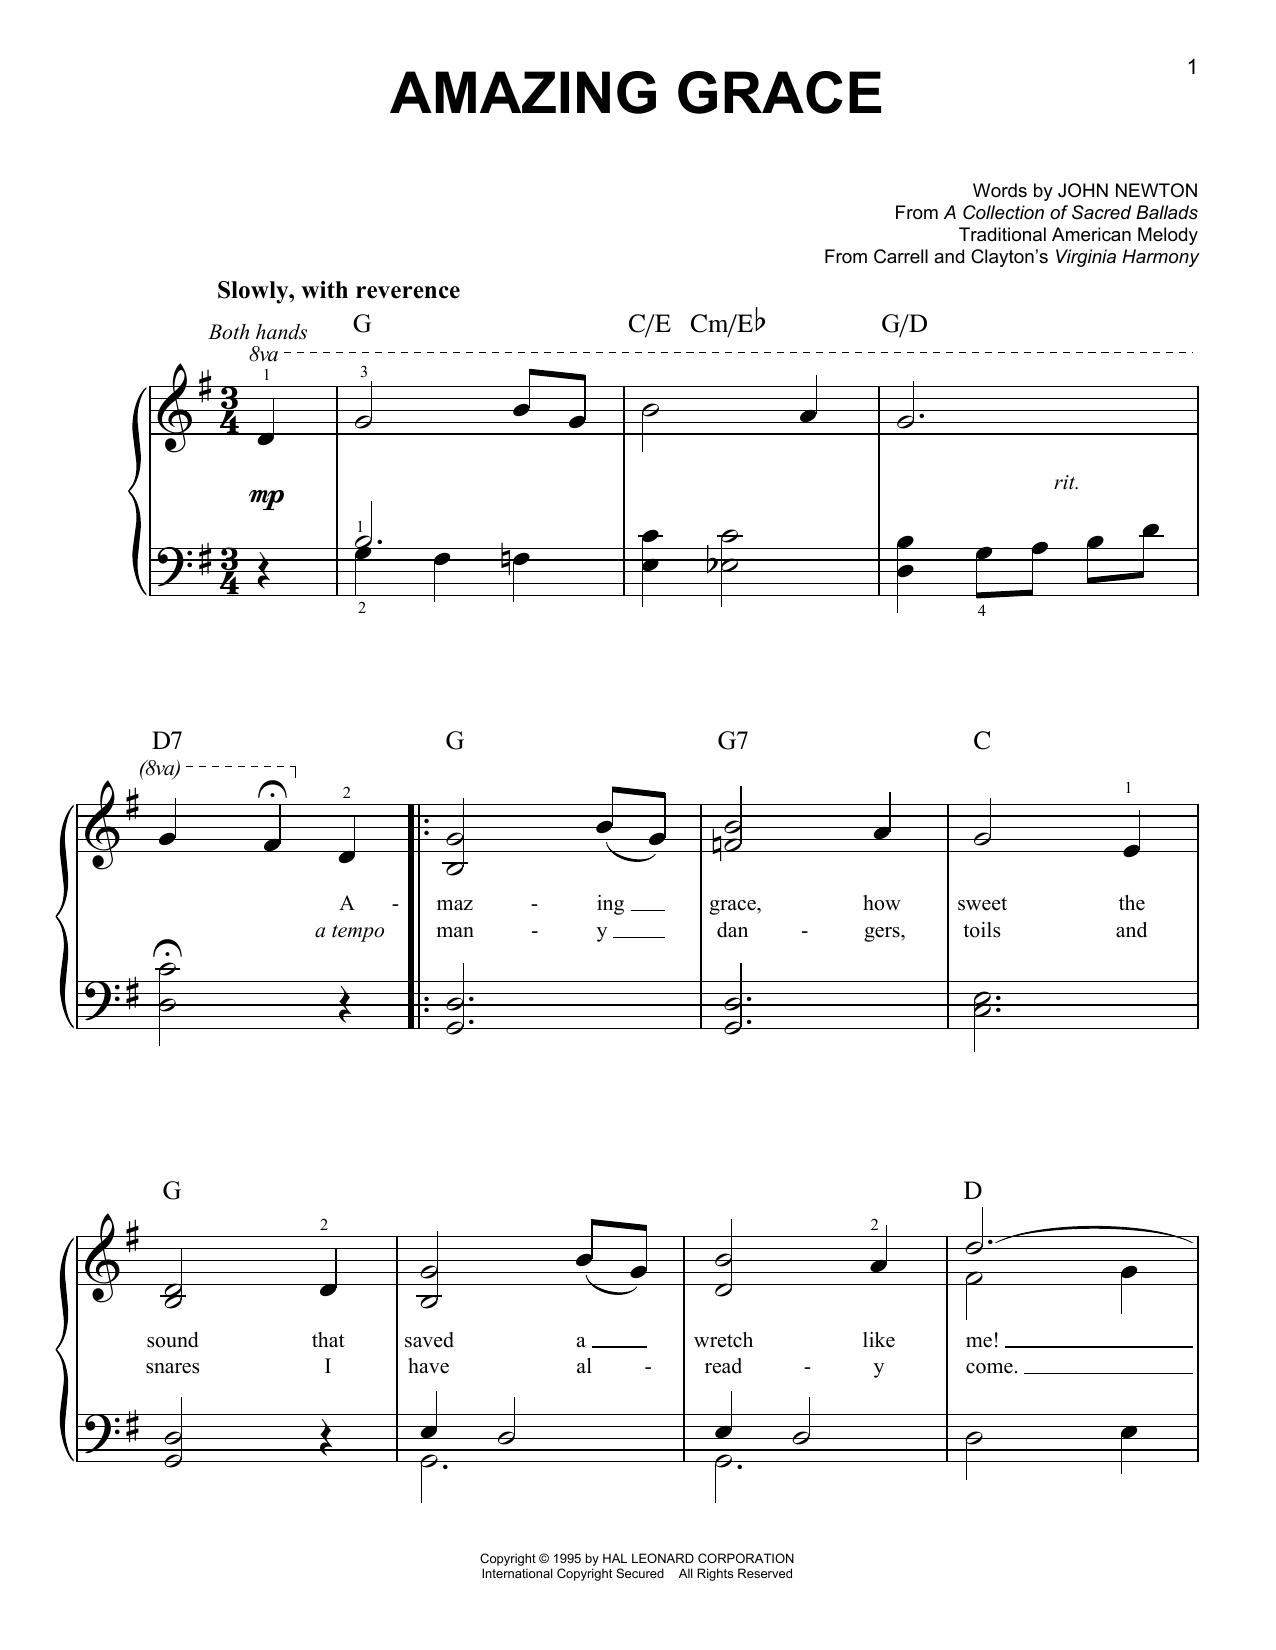 Traditional American Melody Amazing Grace sheet music notes and chords arranged for Baritone Ukulele